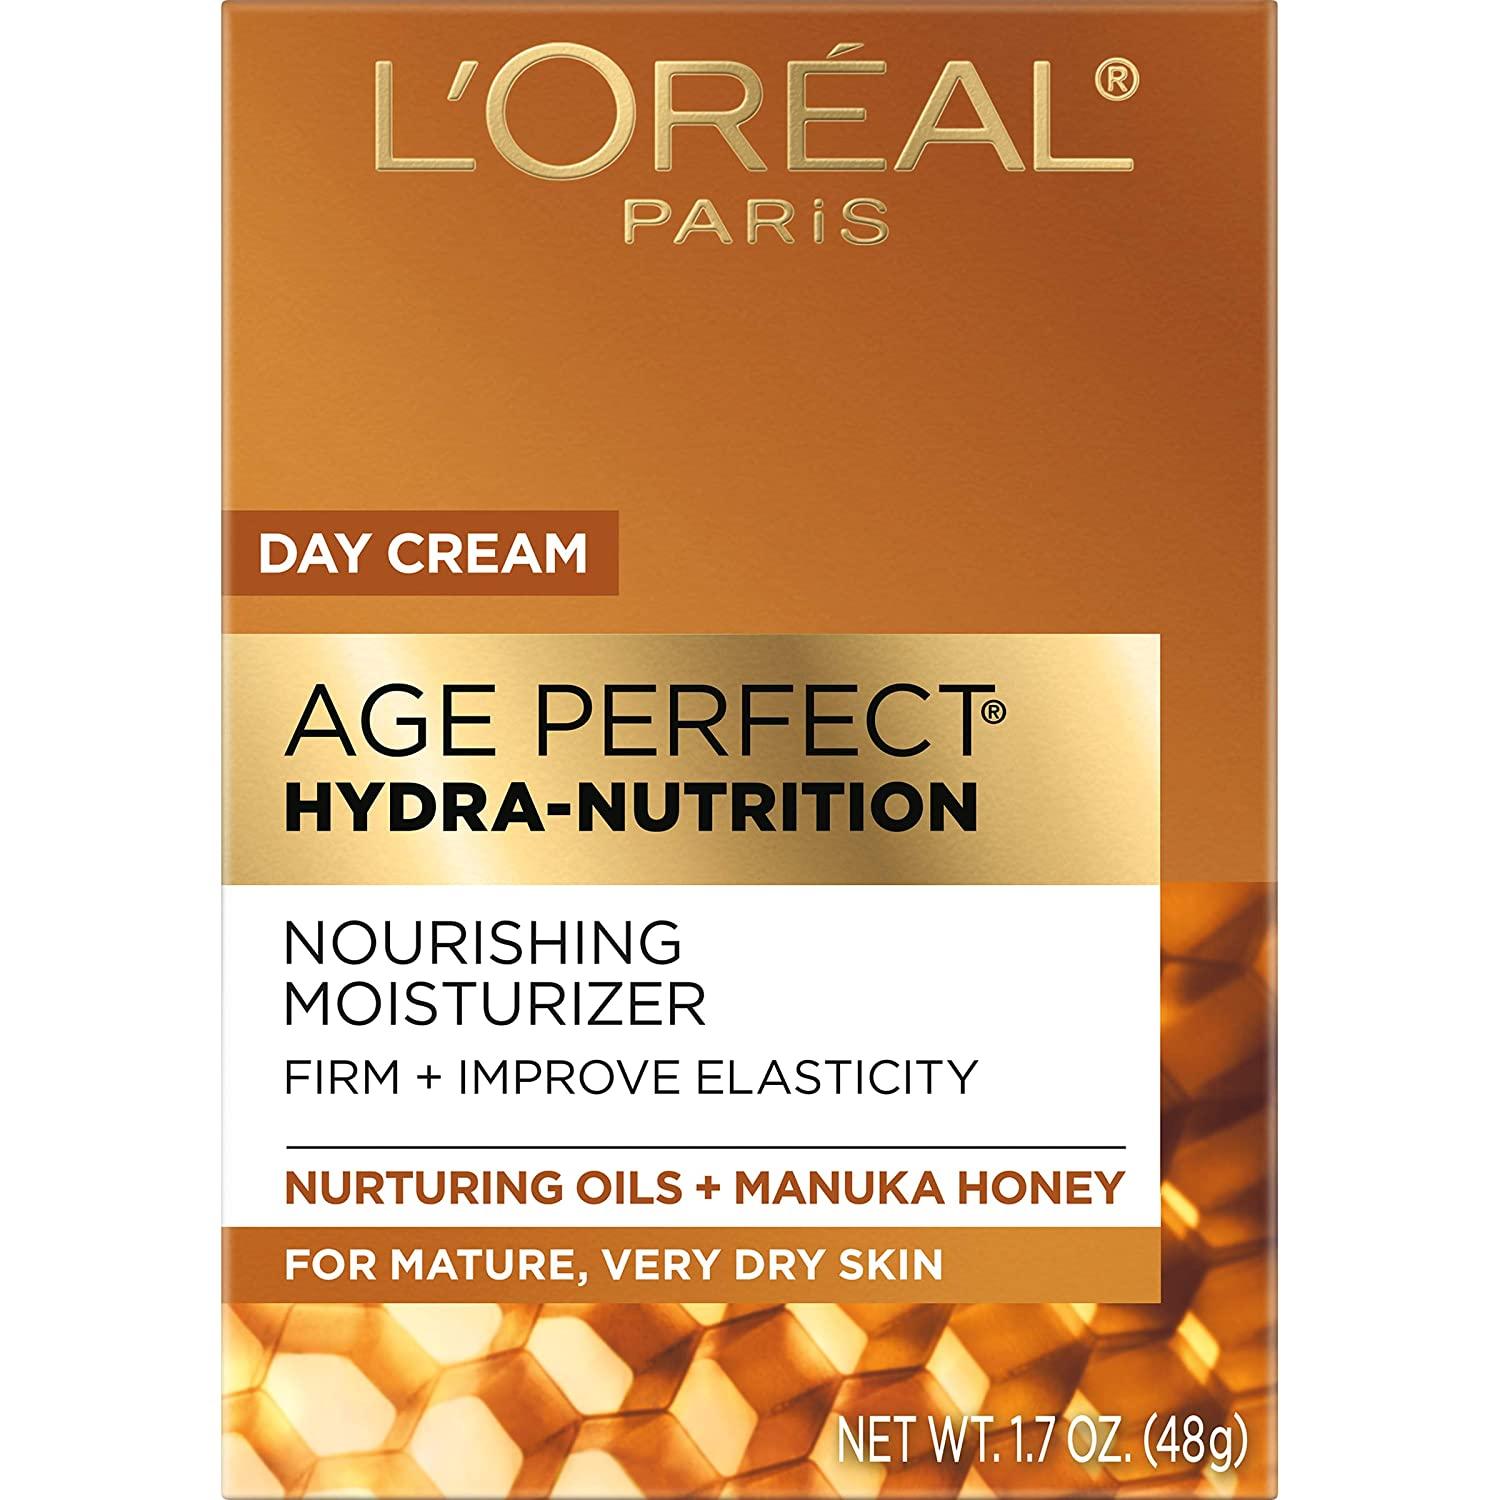 L'Oreal Paris Skincare Age Perfect Hydra Nutrition Ultra Nourishing Honey  Night Balm, Face Moisturizer to Comfort, Improve Resilience on Dry Skin,  Manuka Honey and Nurturing Oils, 1.7 oz.